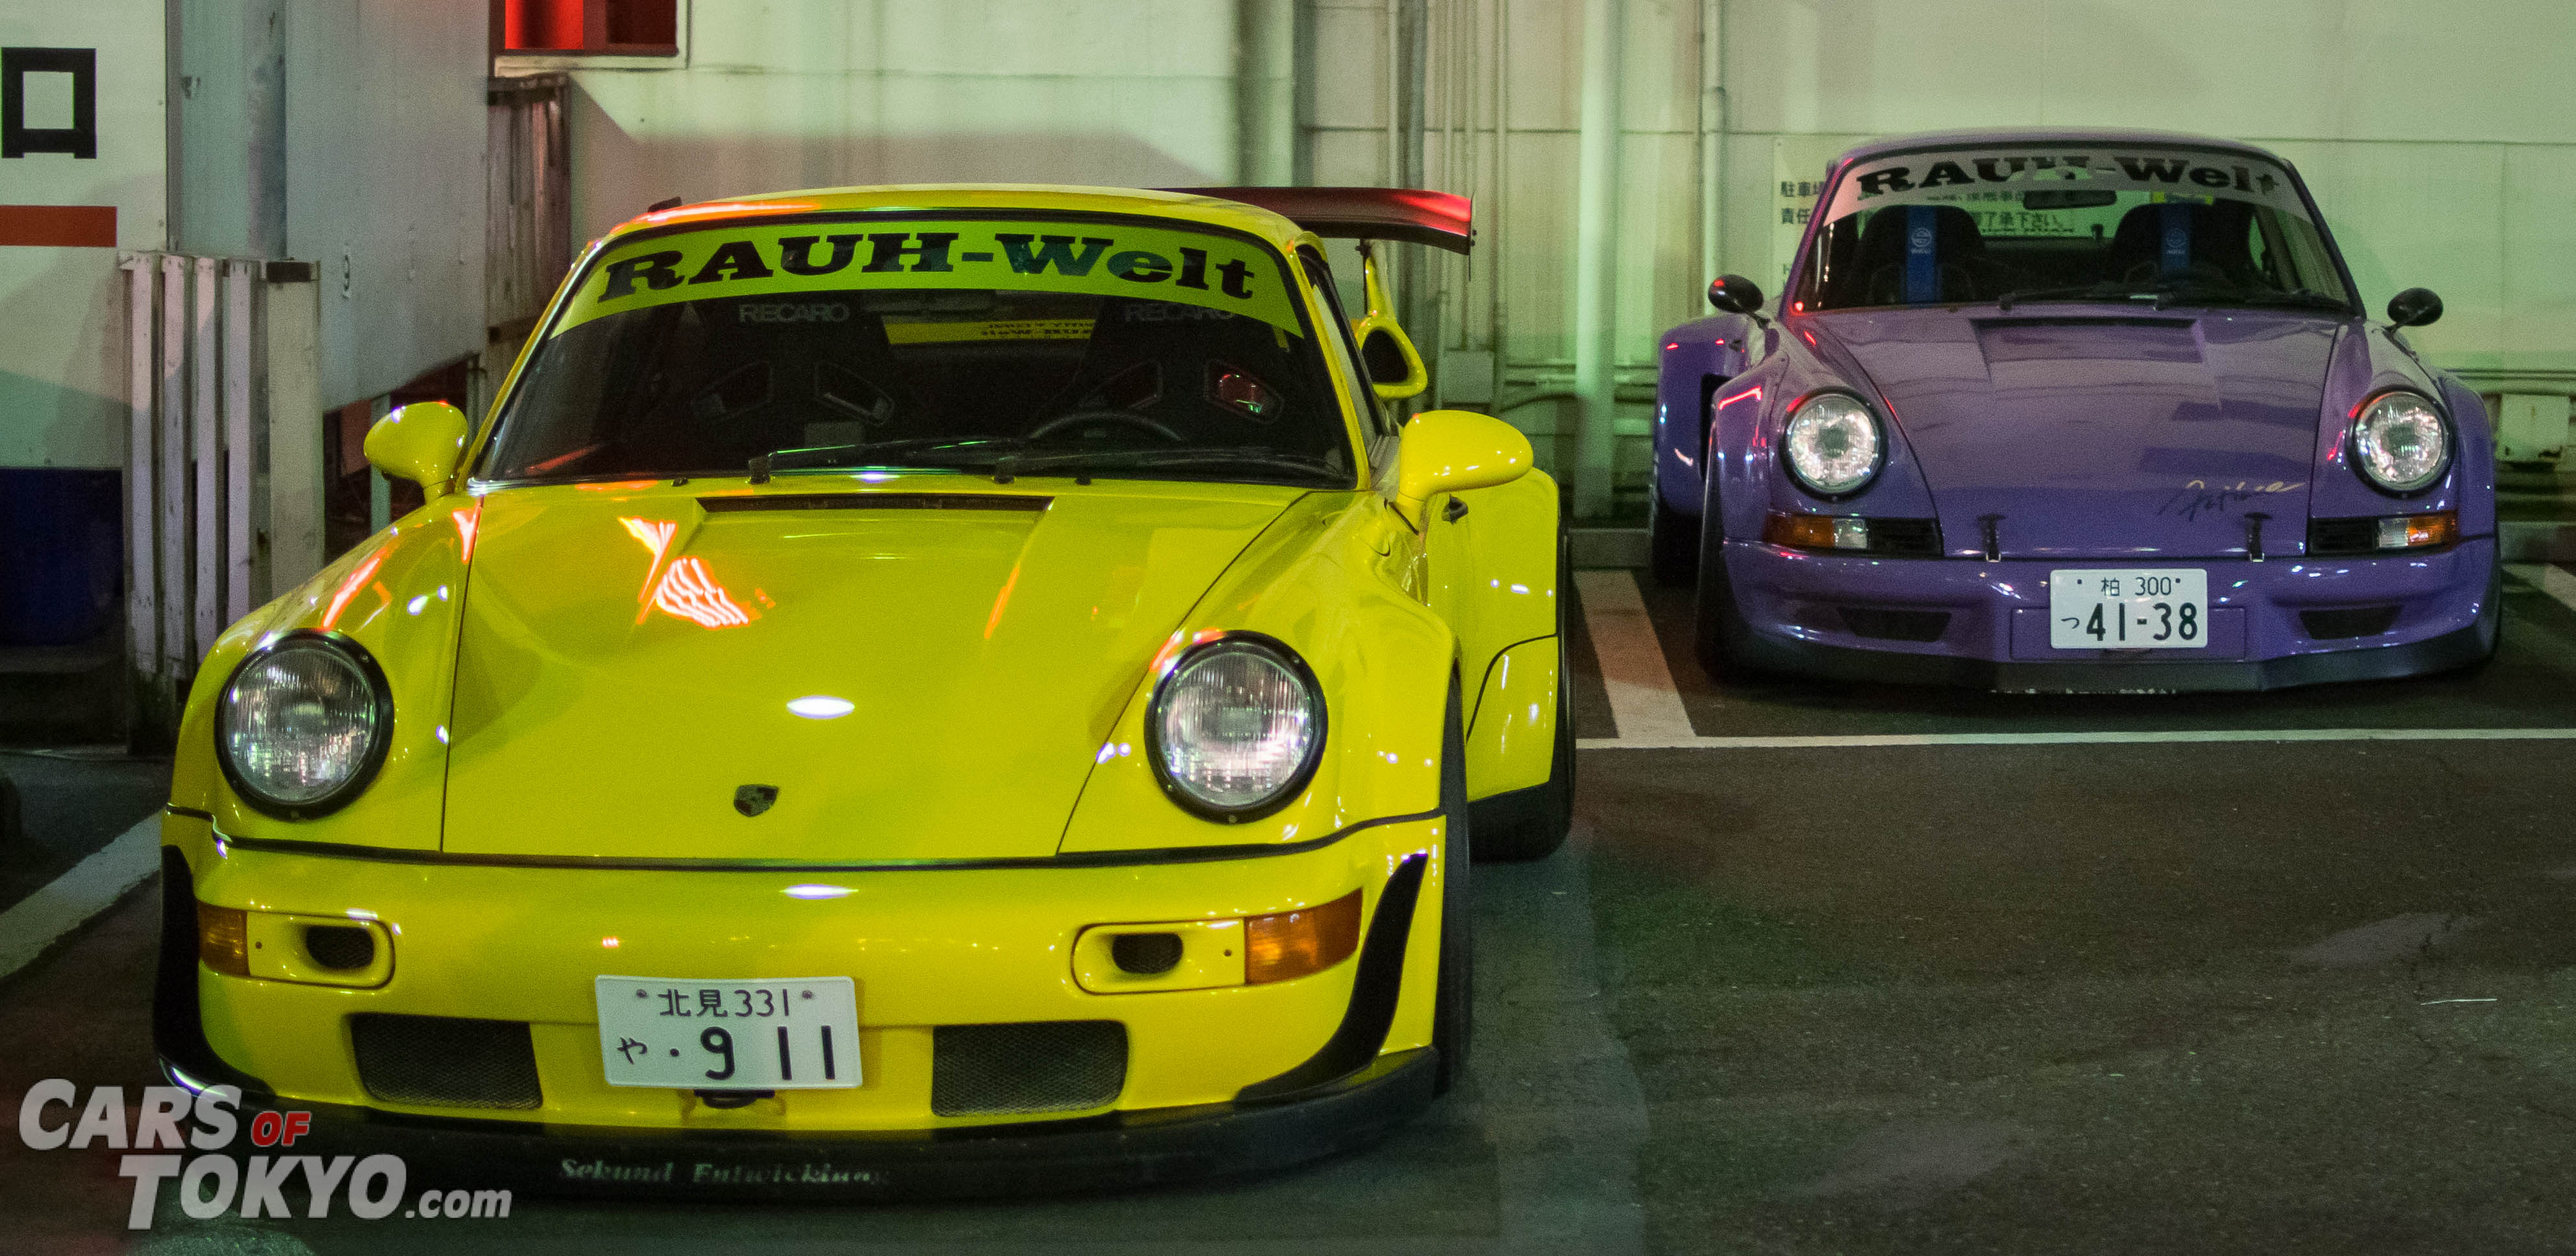 Cars of Tokyo RWB Porsche 911 Yellow and Purple